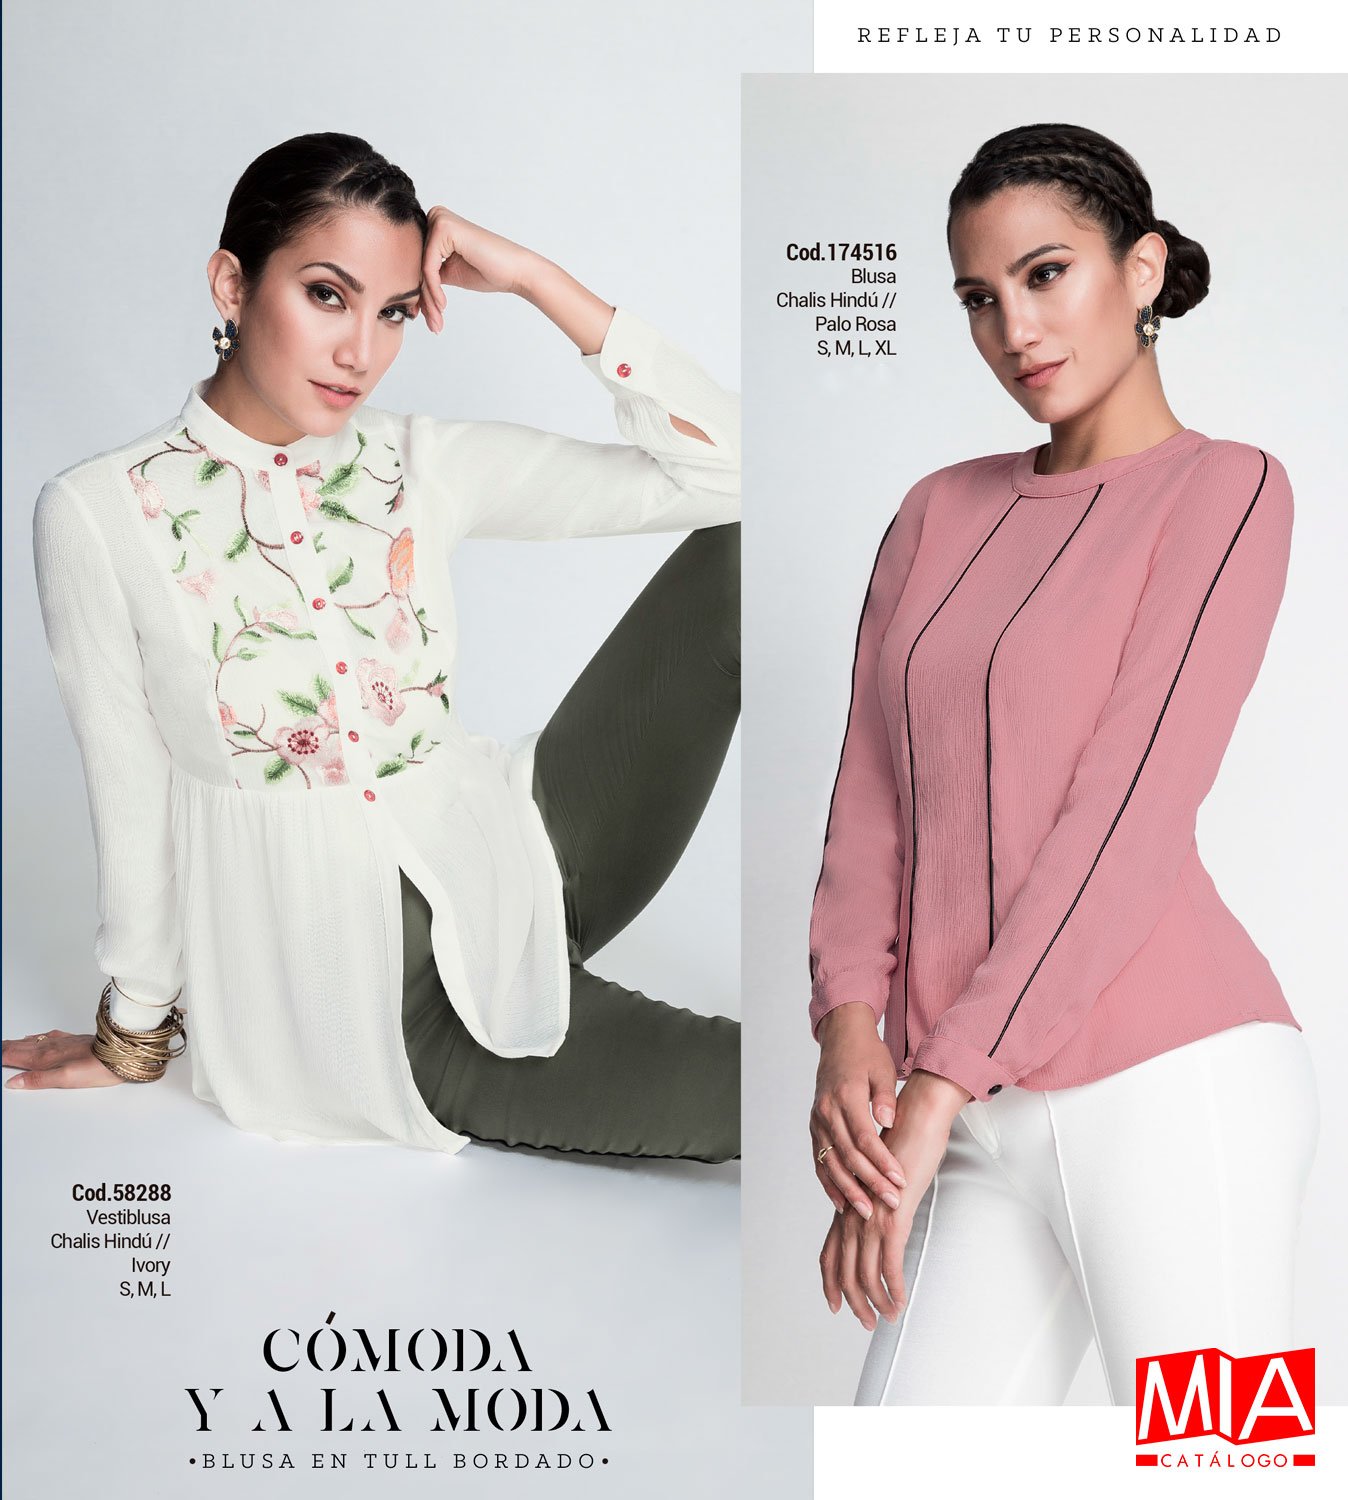 Mia Catálogo on Twitter: "Tendencias en blusas para mujeres modernas 😍 #FashionRevolution de #MiaStore #Blusas Chalis hindú Solicita tu catálogo: 📲 Whatsapp: 941446581 📝 Regístrate: https://t.co/wvlUIpbSJj #VentaPorCatálogo #moda ...